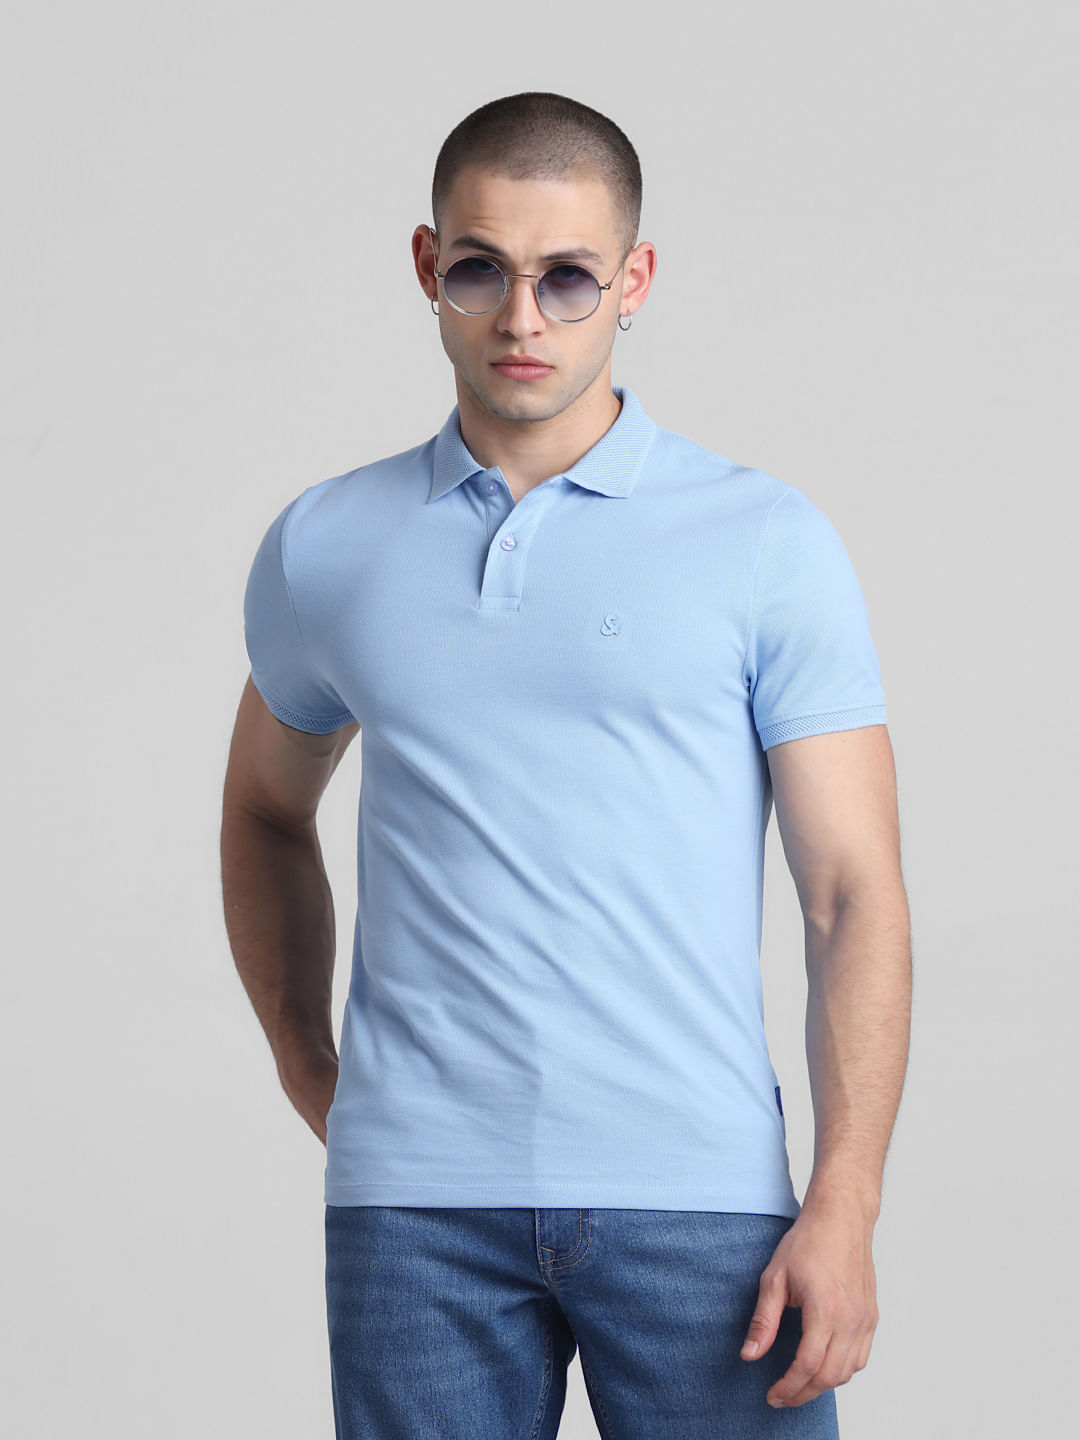 Buy Peter England Elite Light Blue Solid Full Sleeves Formal Shirts online